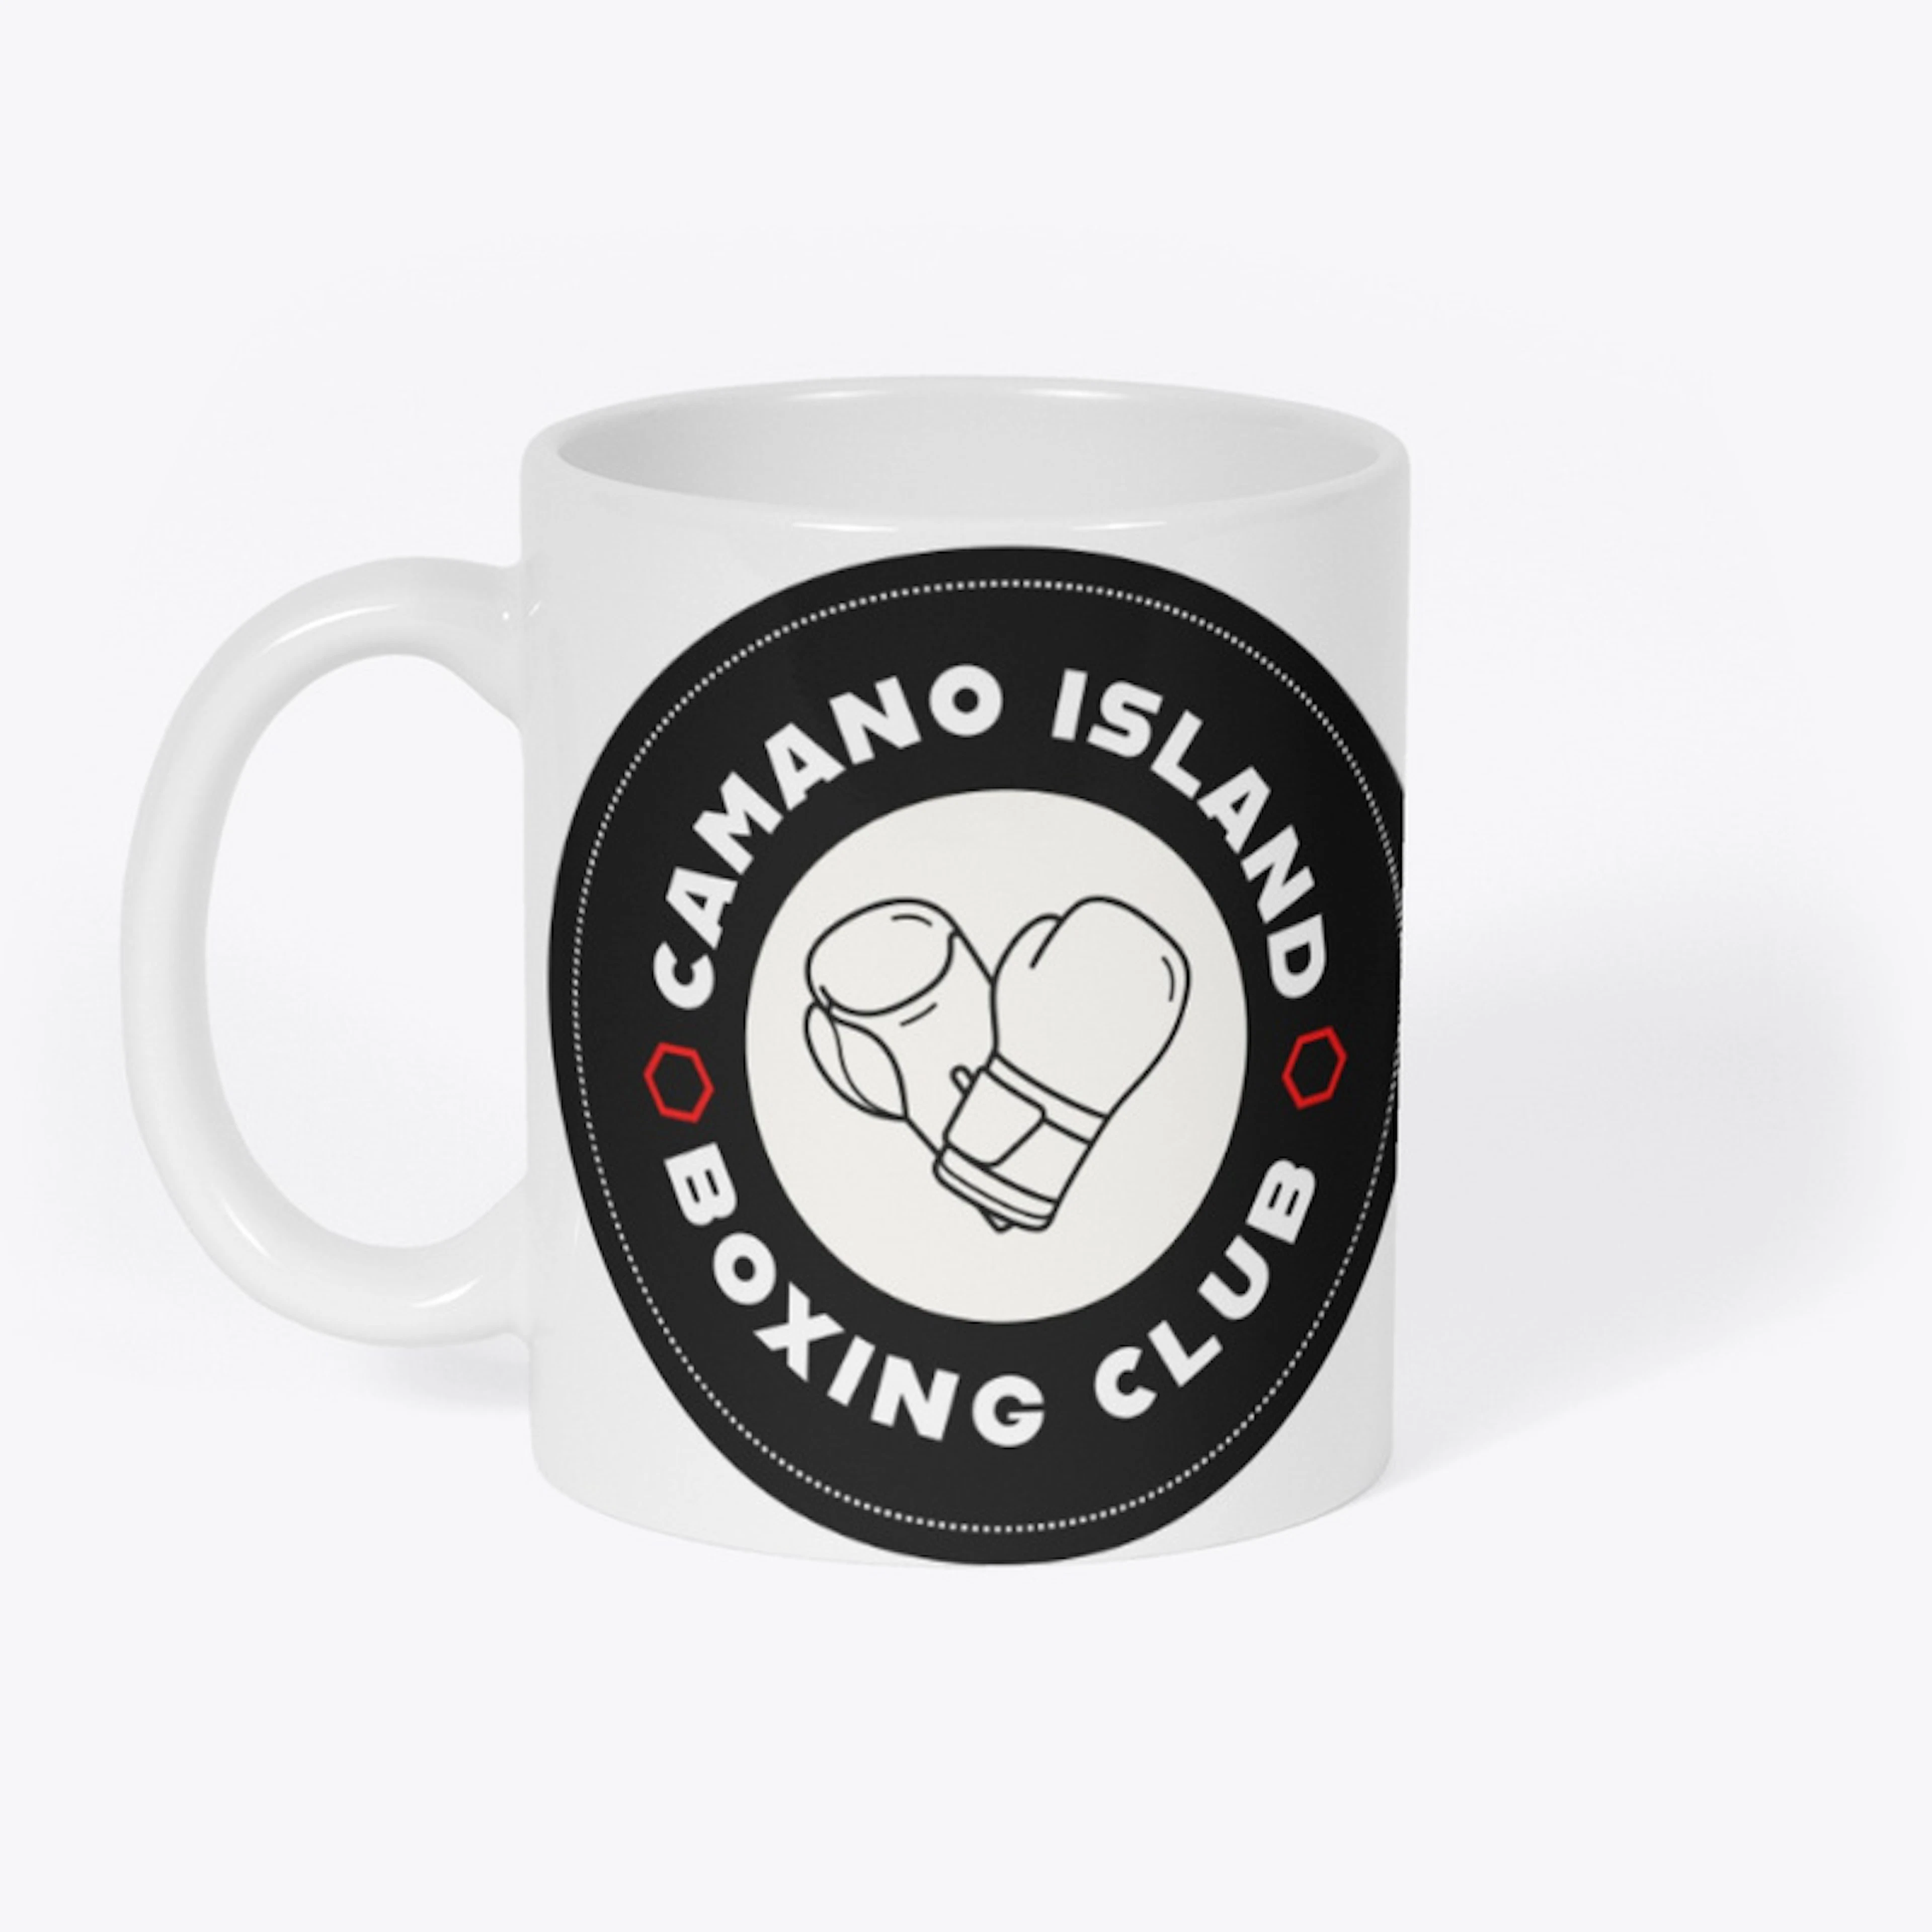 Camano Island Boxing Club T